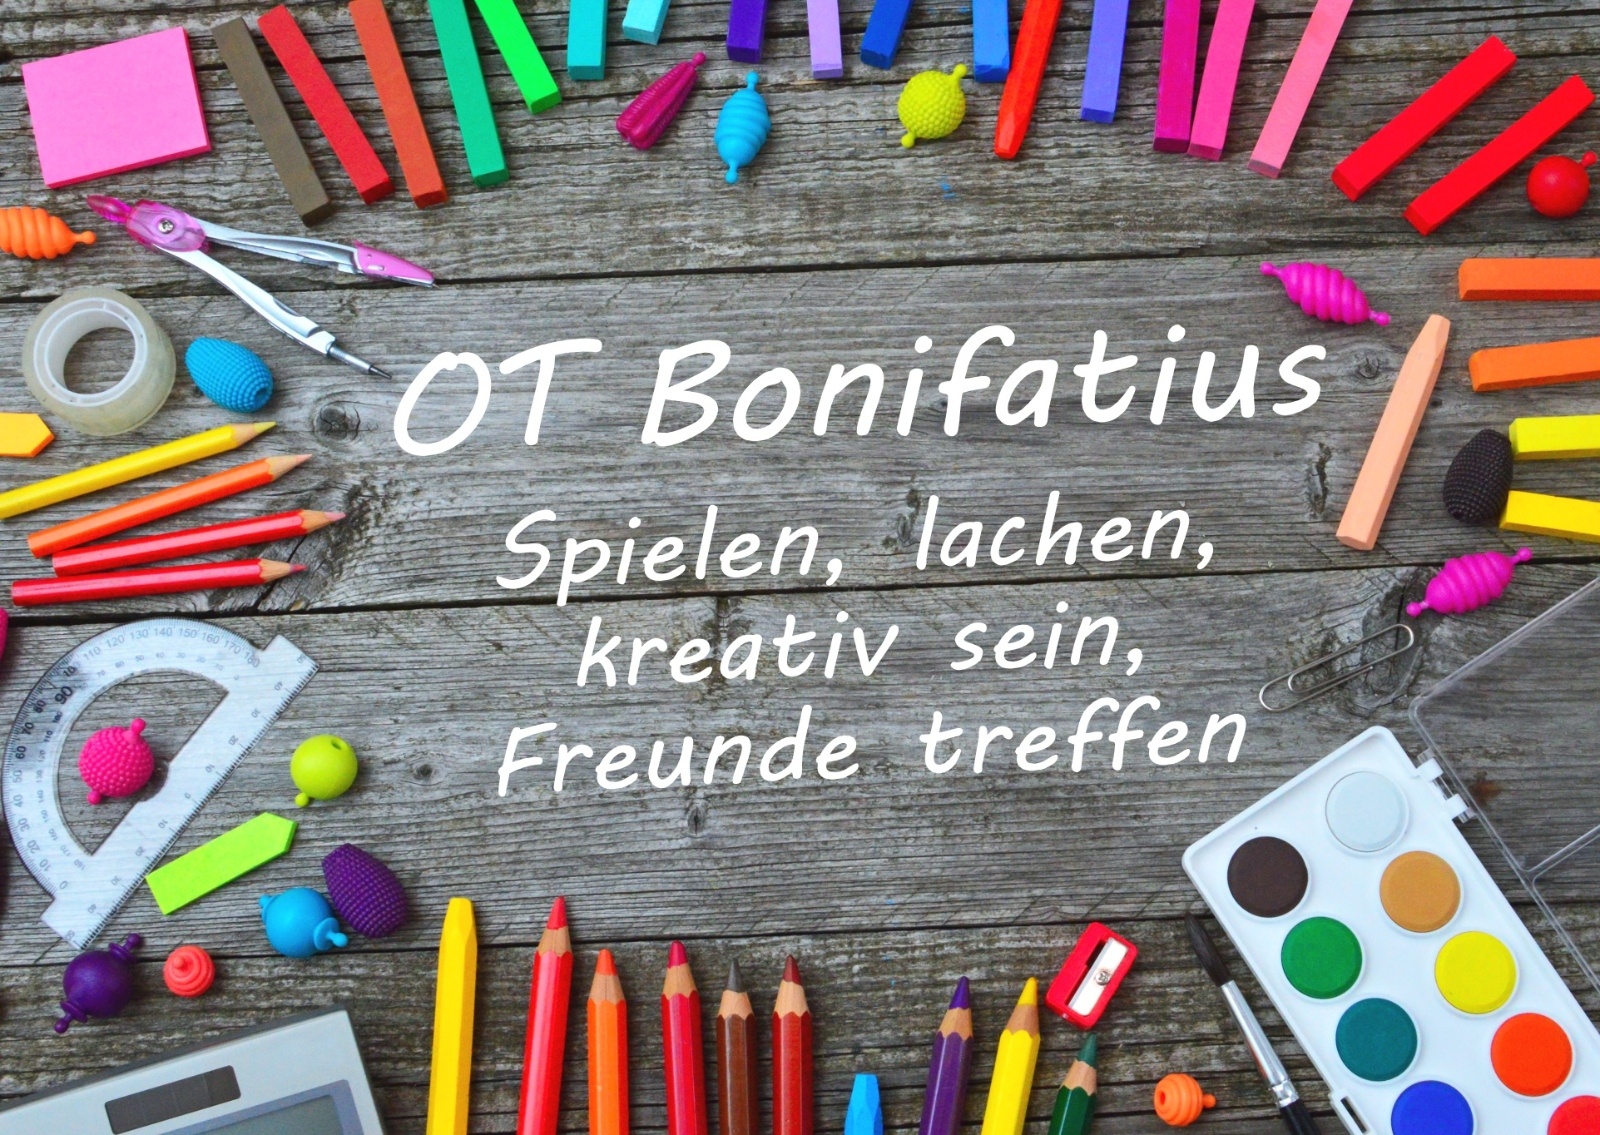 OT Bonifatius